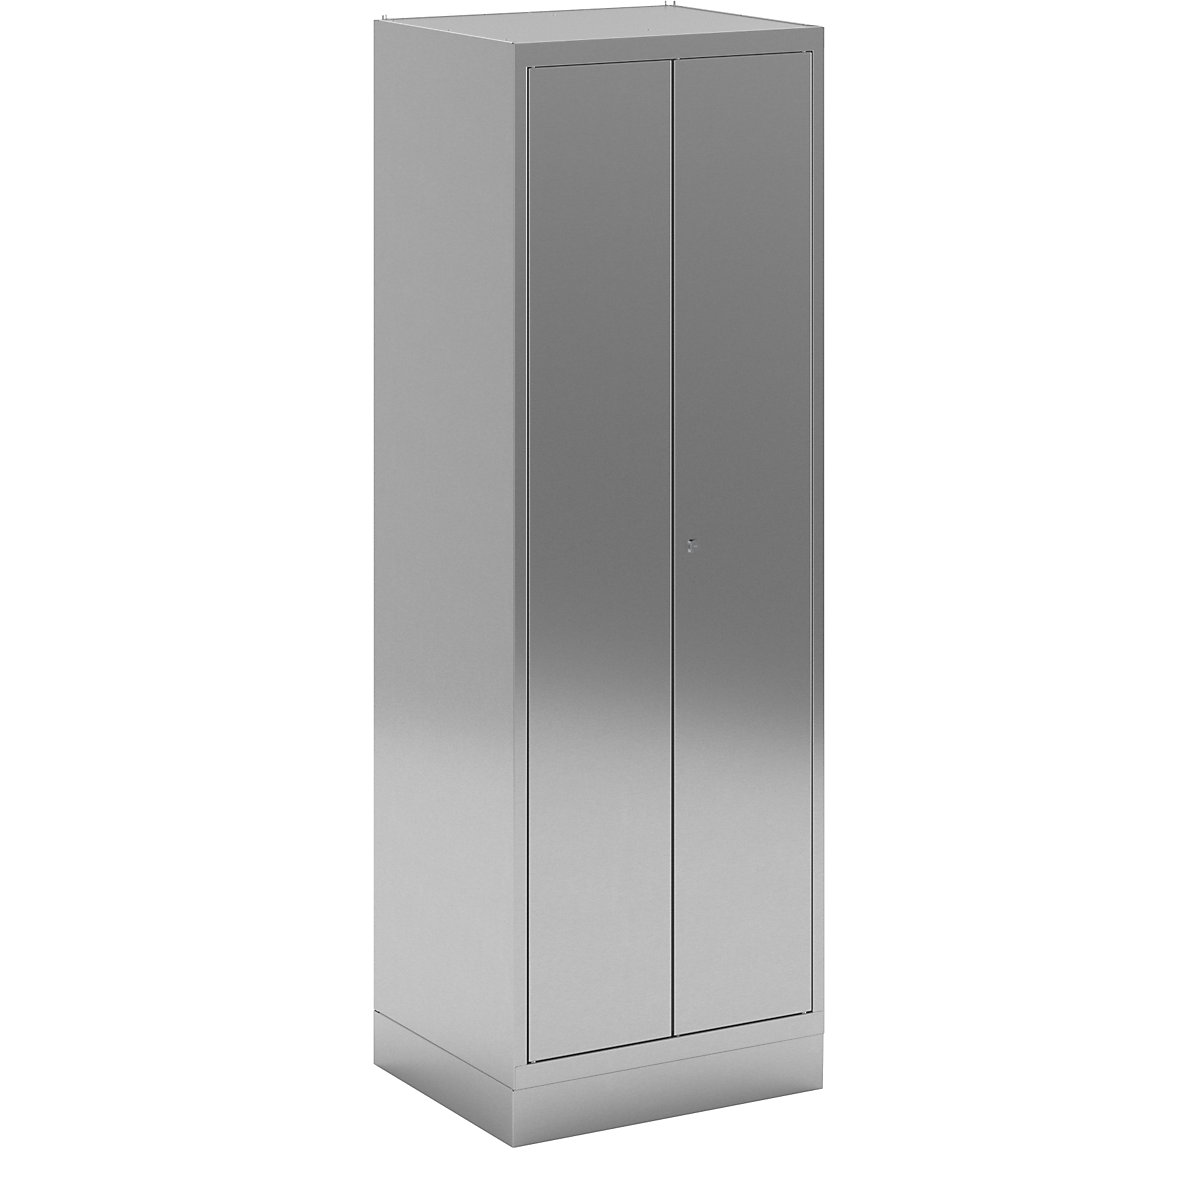 Stainless steel multi-purpose cupboard